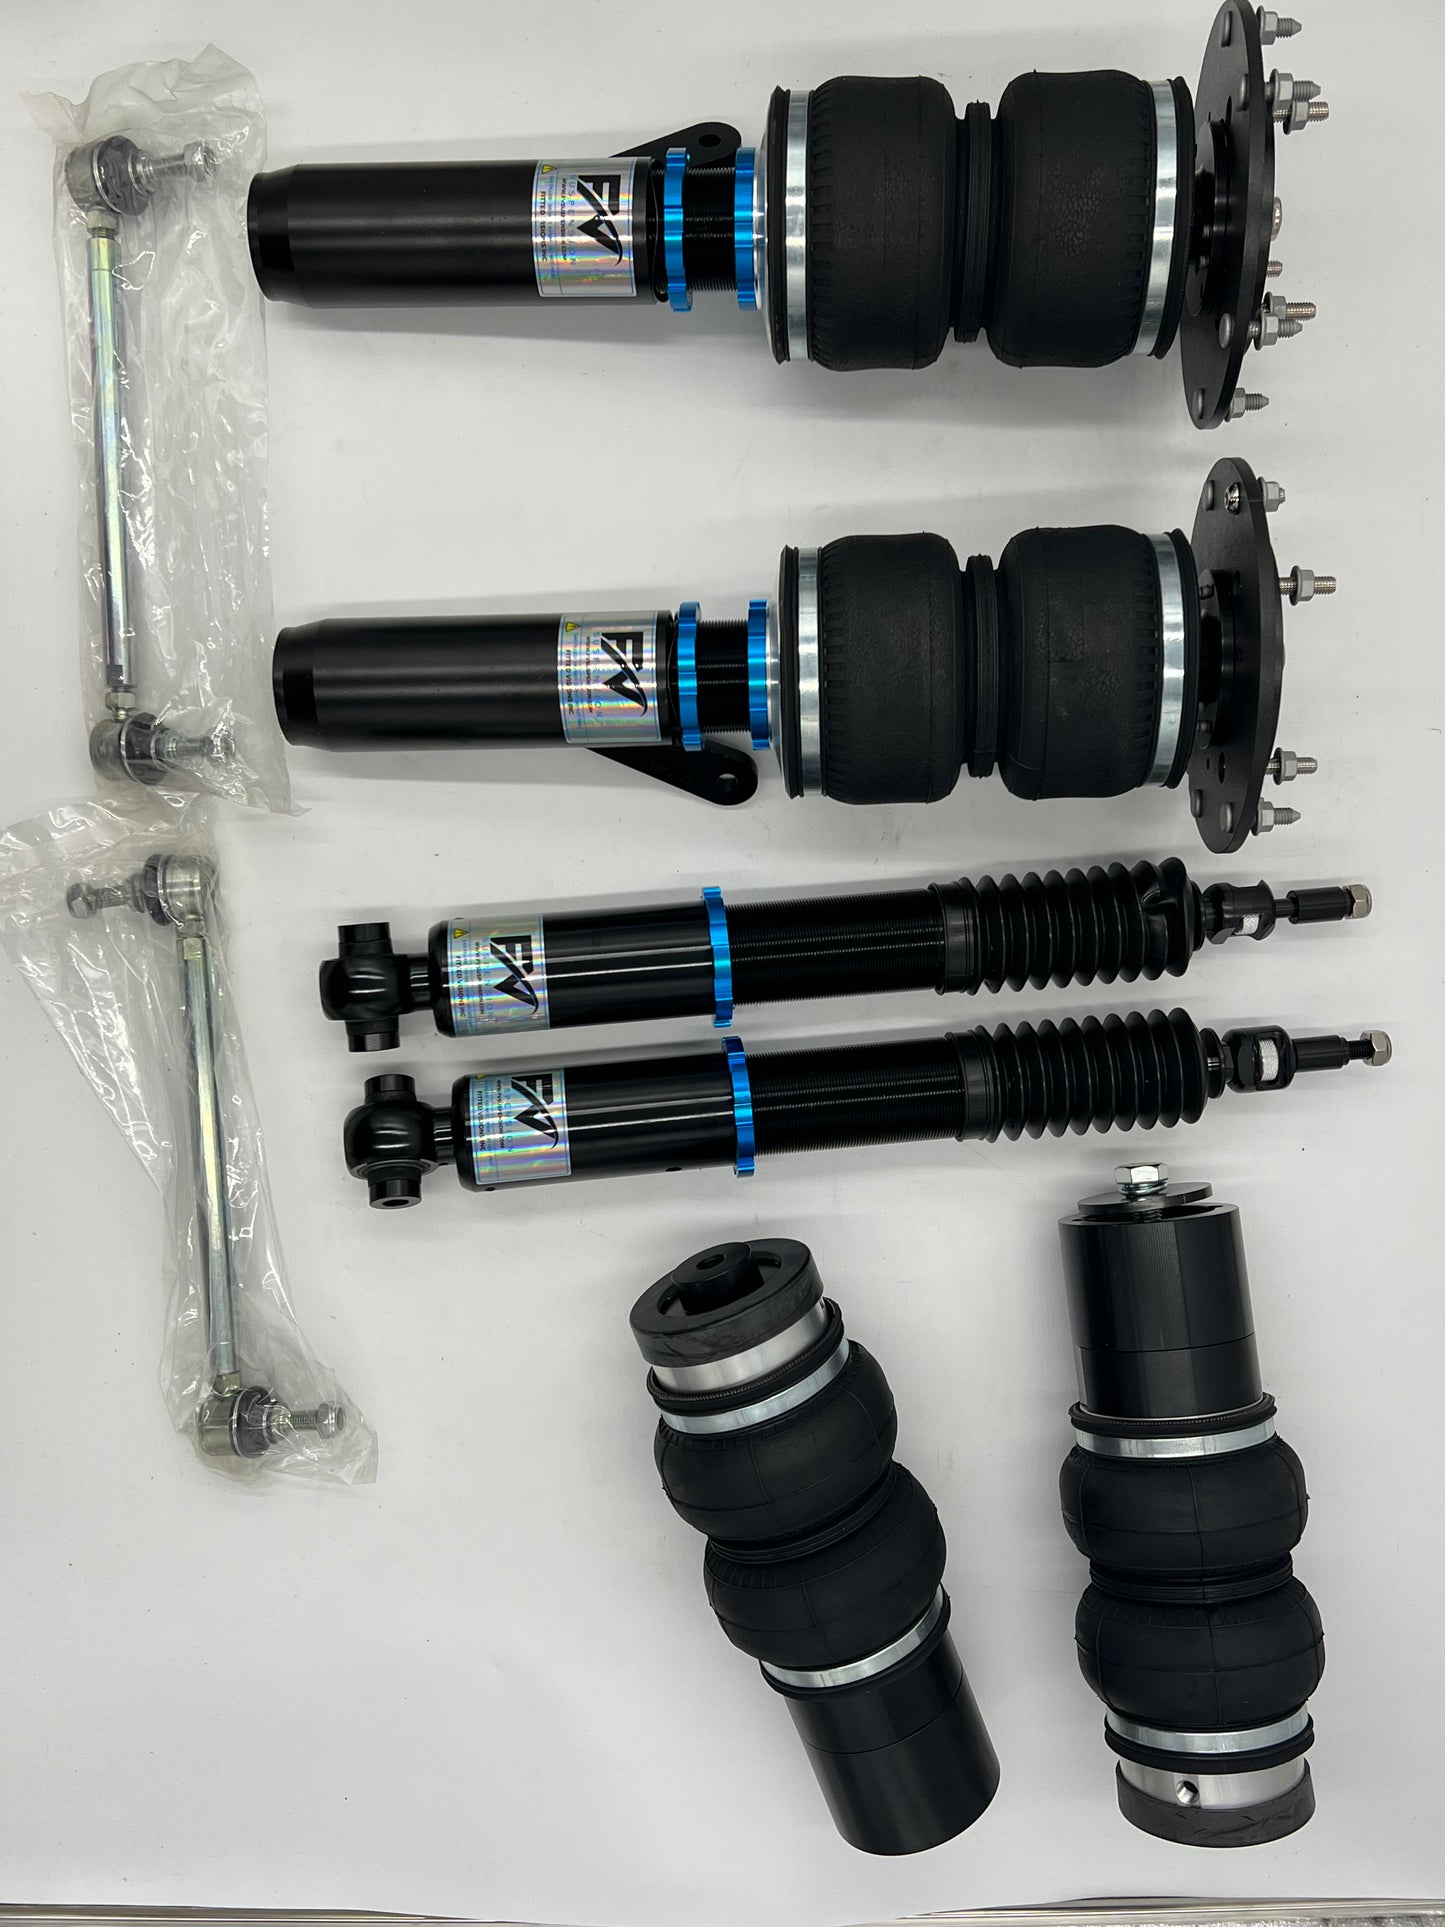 FV Suspension 3H Tier 3 Complete Air Ride kit for 15-20 BMW M4 F82 - Full Kit